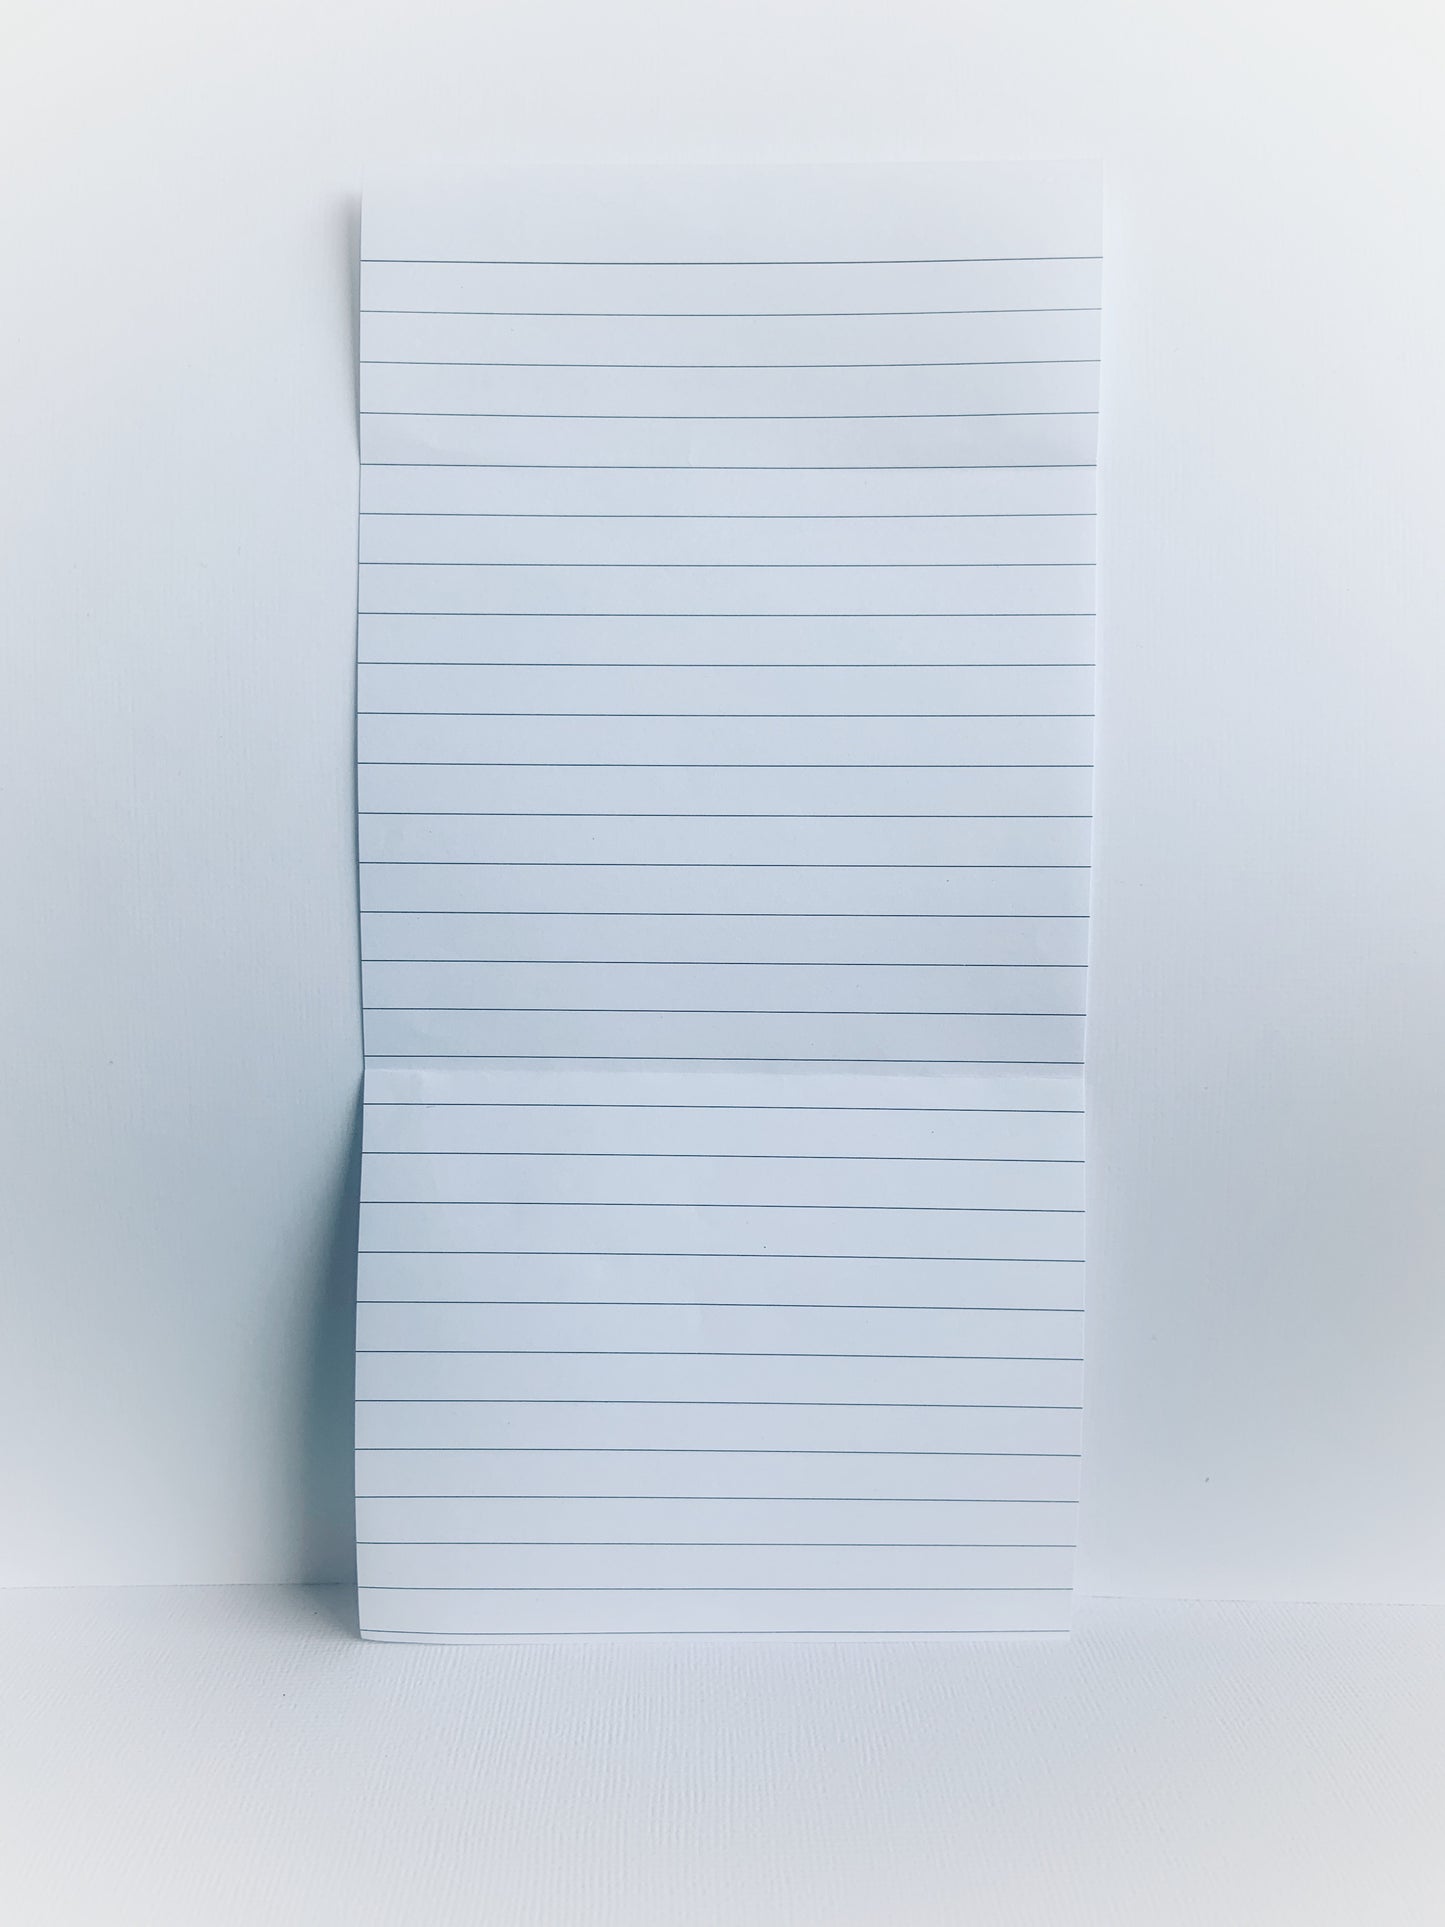 Lined notepaper.